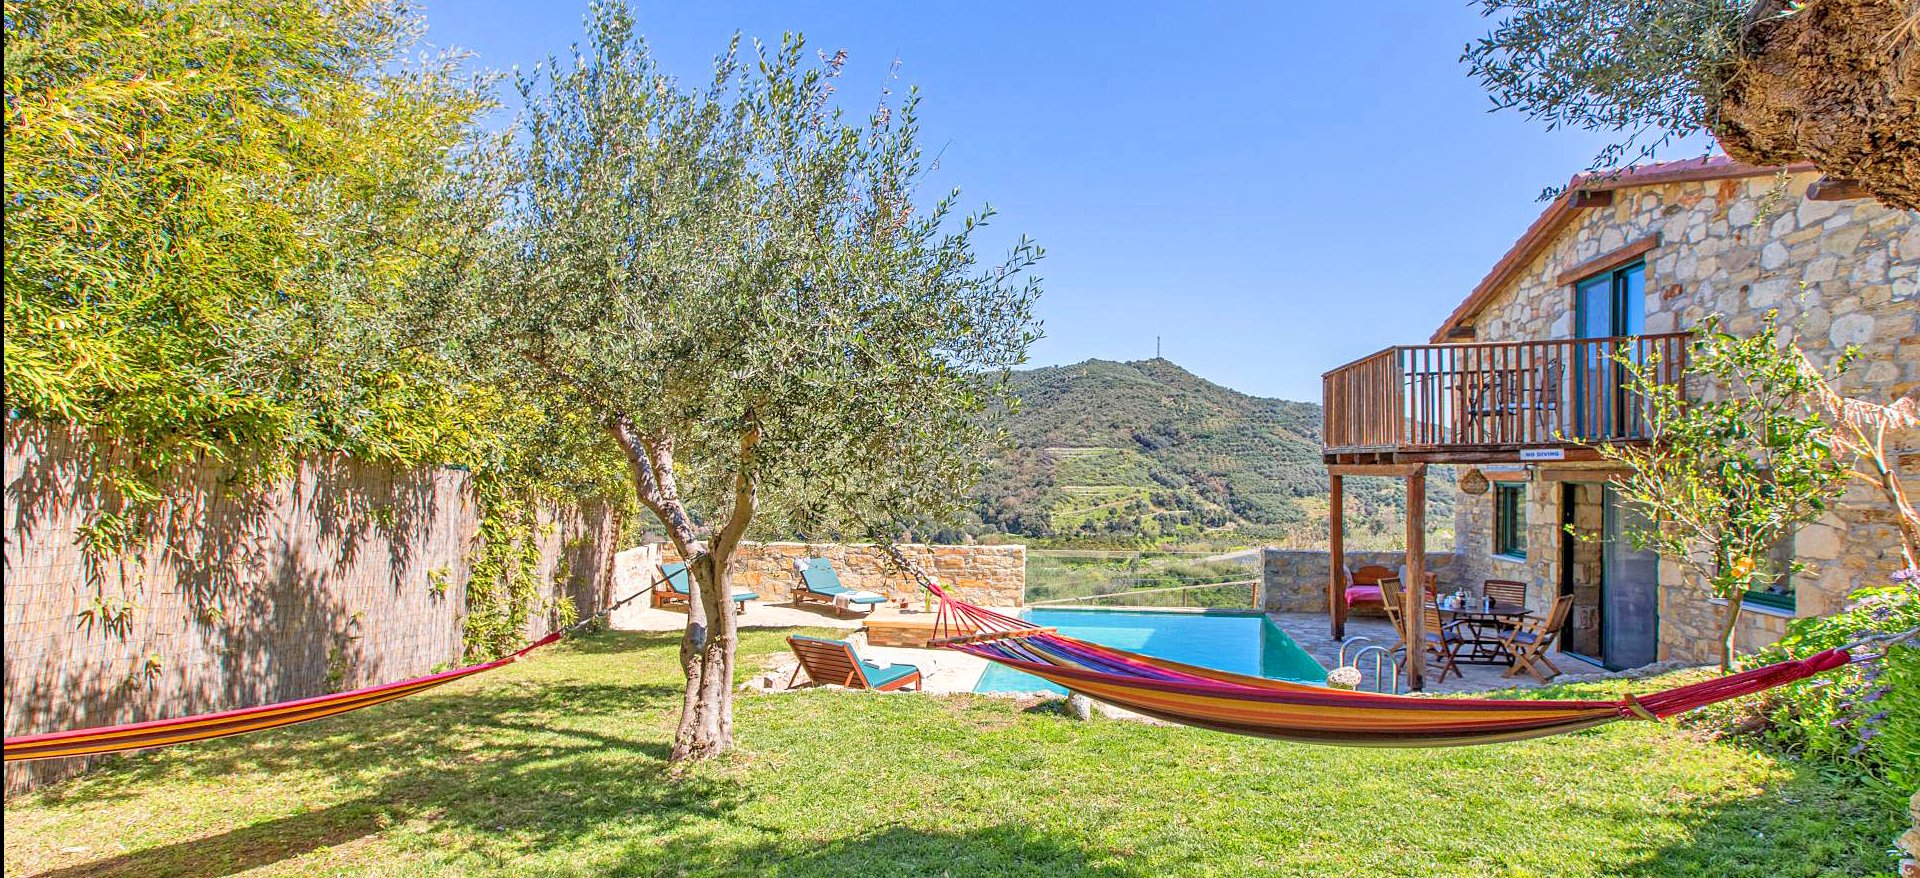 Ferienhaus Kreta mit beheizbarem Pool.